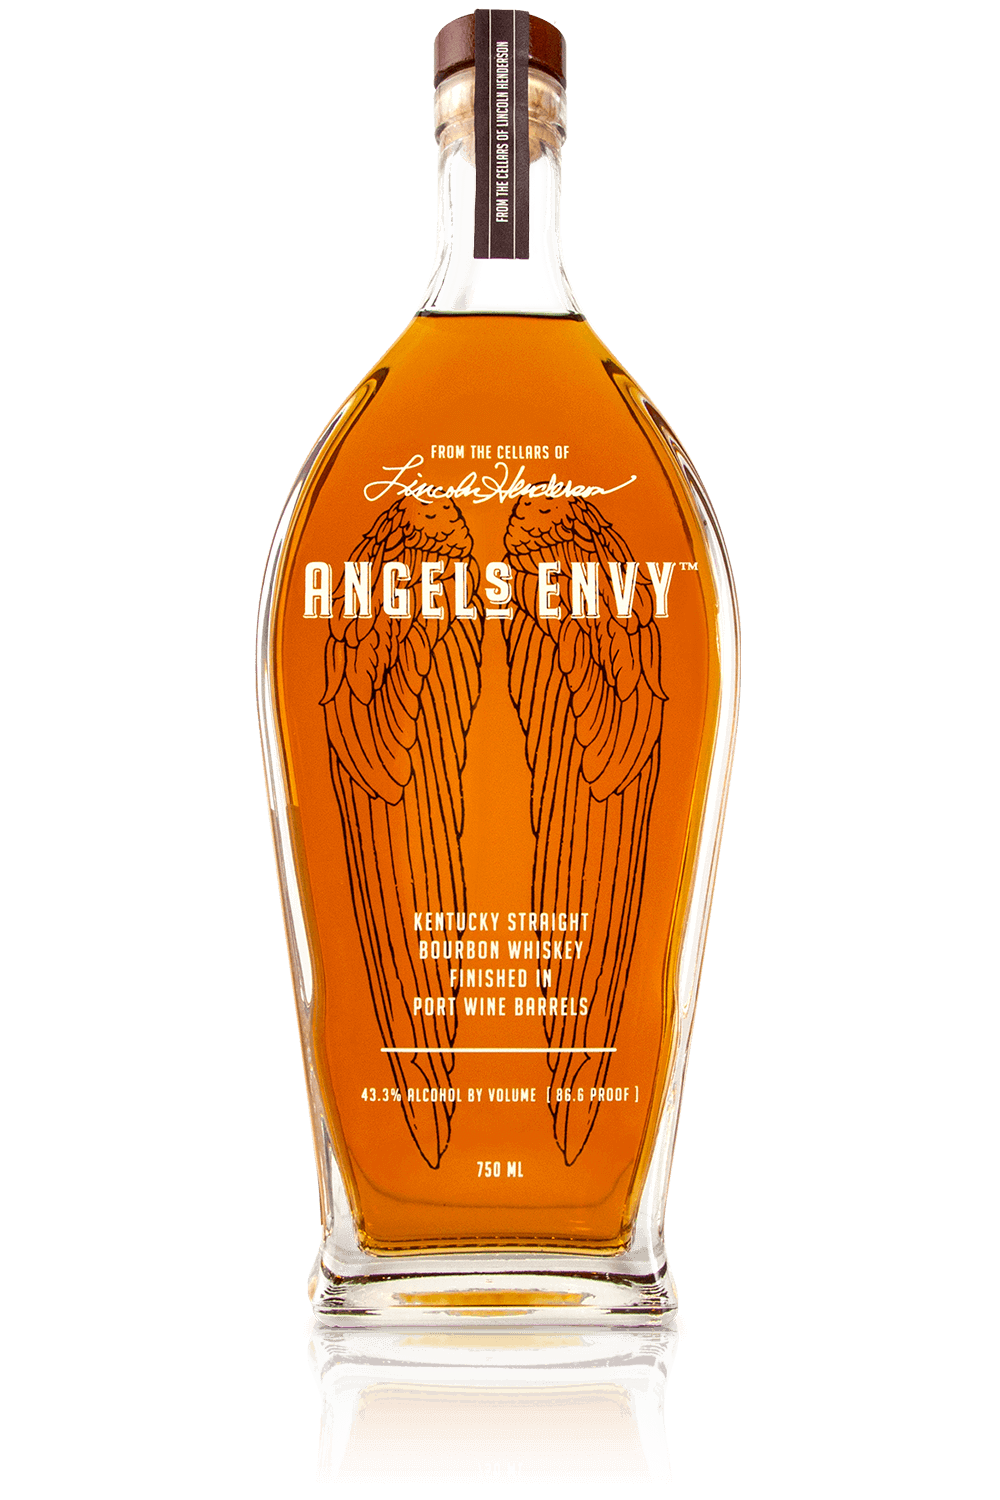 Angel's Envy Kentucky Straight Bourbon